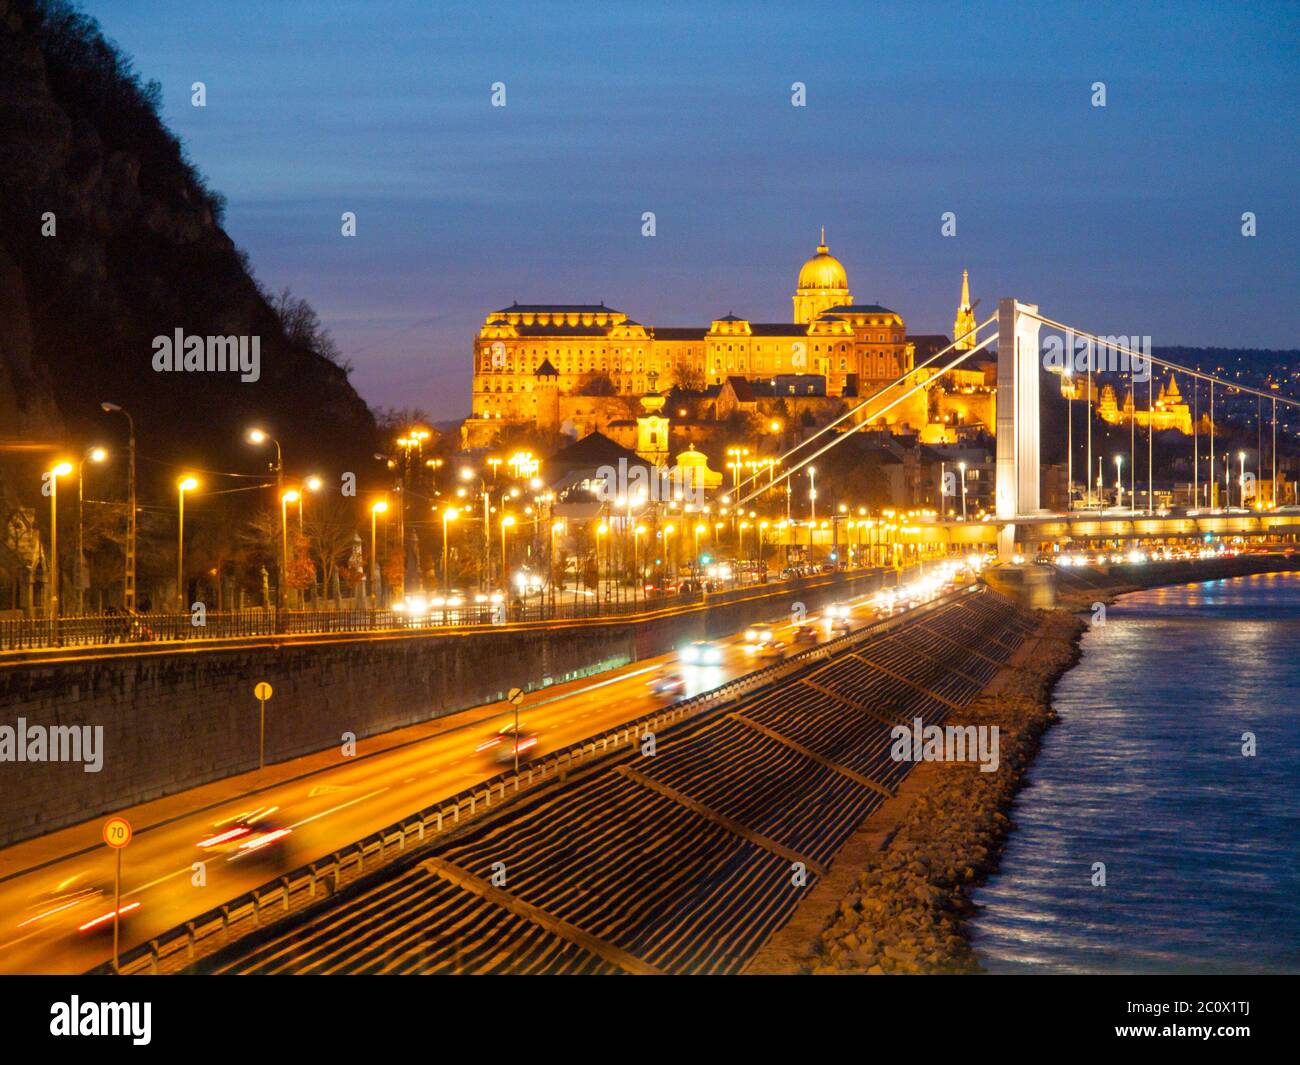 Illuminated Royal Buda Castle above Danube River by night in Budapest, Hungary, Europe. UNESCO World Heritage Site. Stock Photo